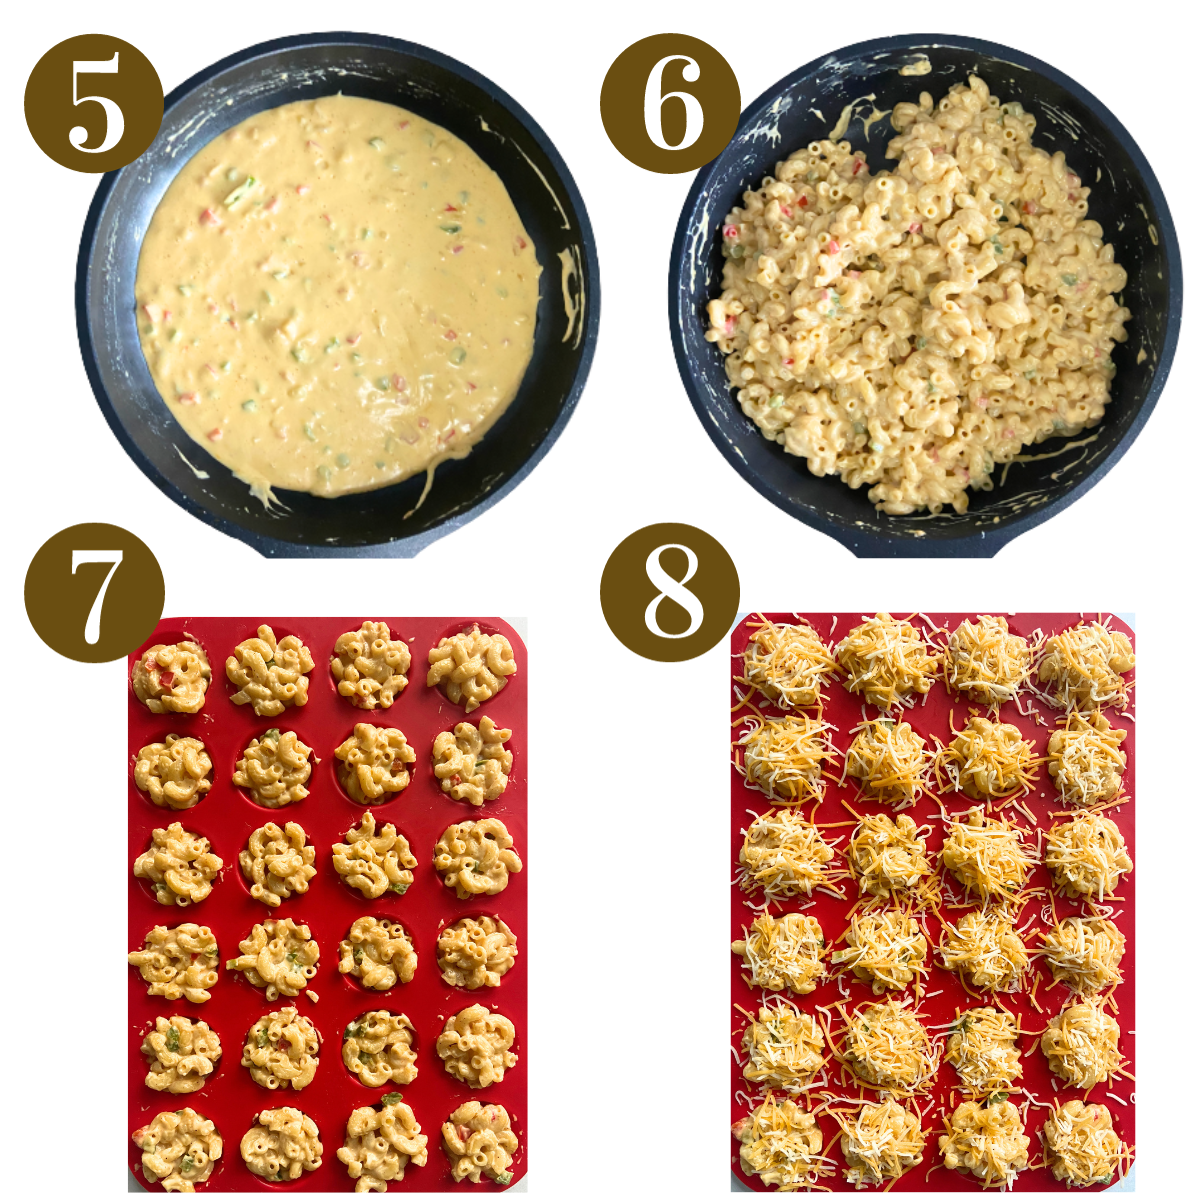 Steps to make Mac and cheese bites.